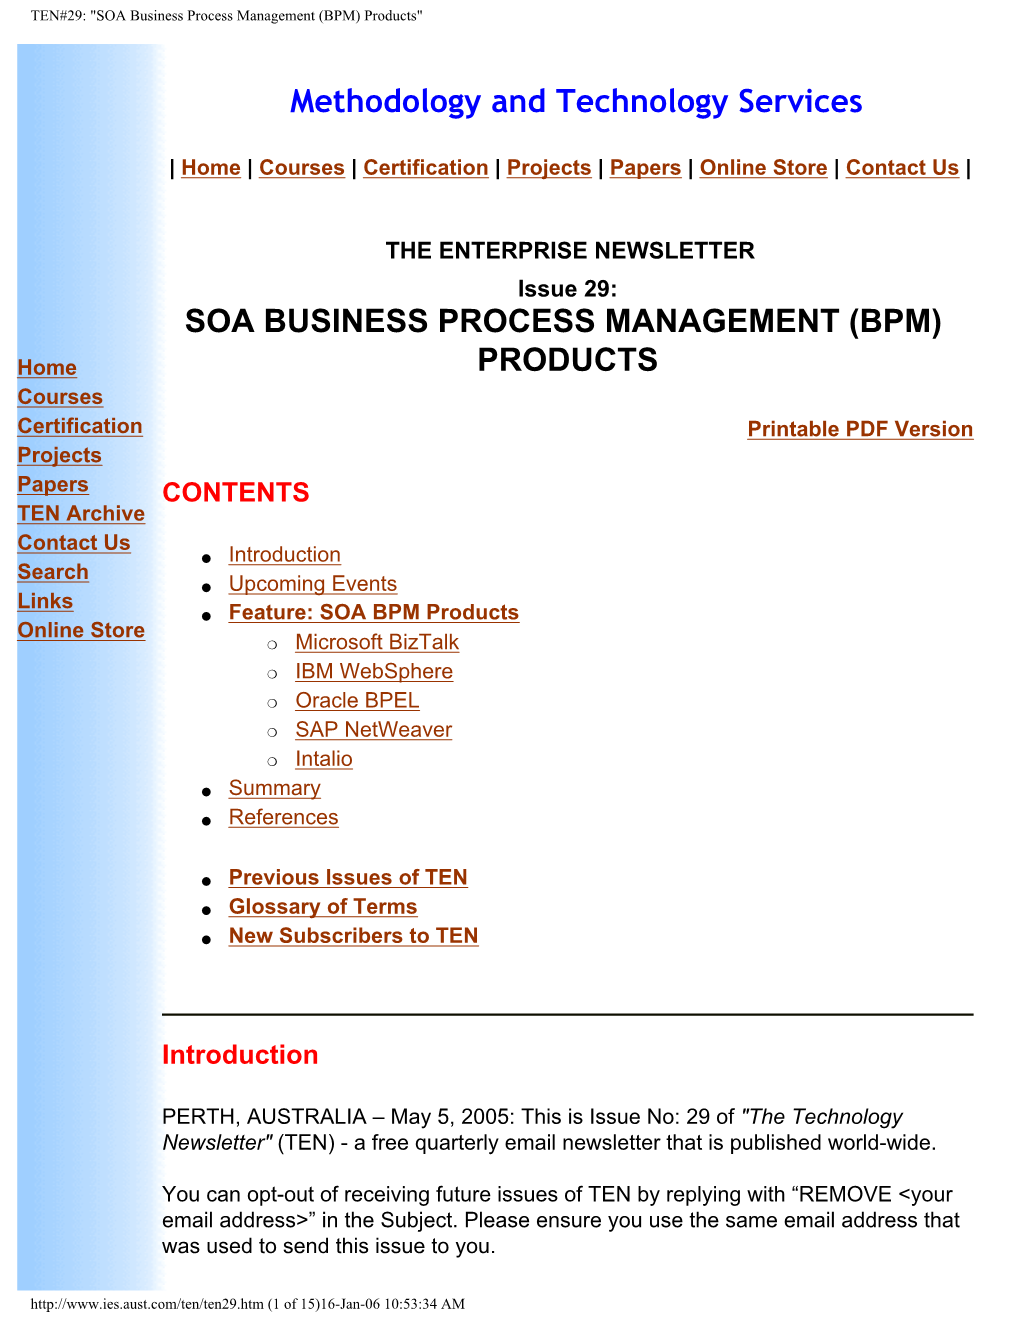 SOA Business Process Management (BPM) Products"